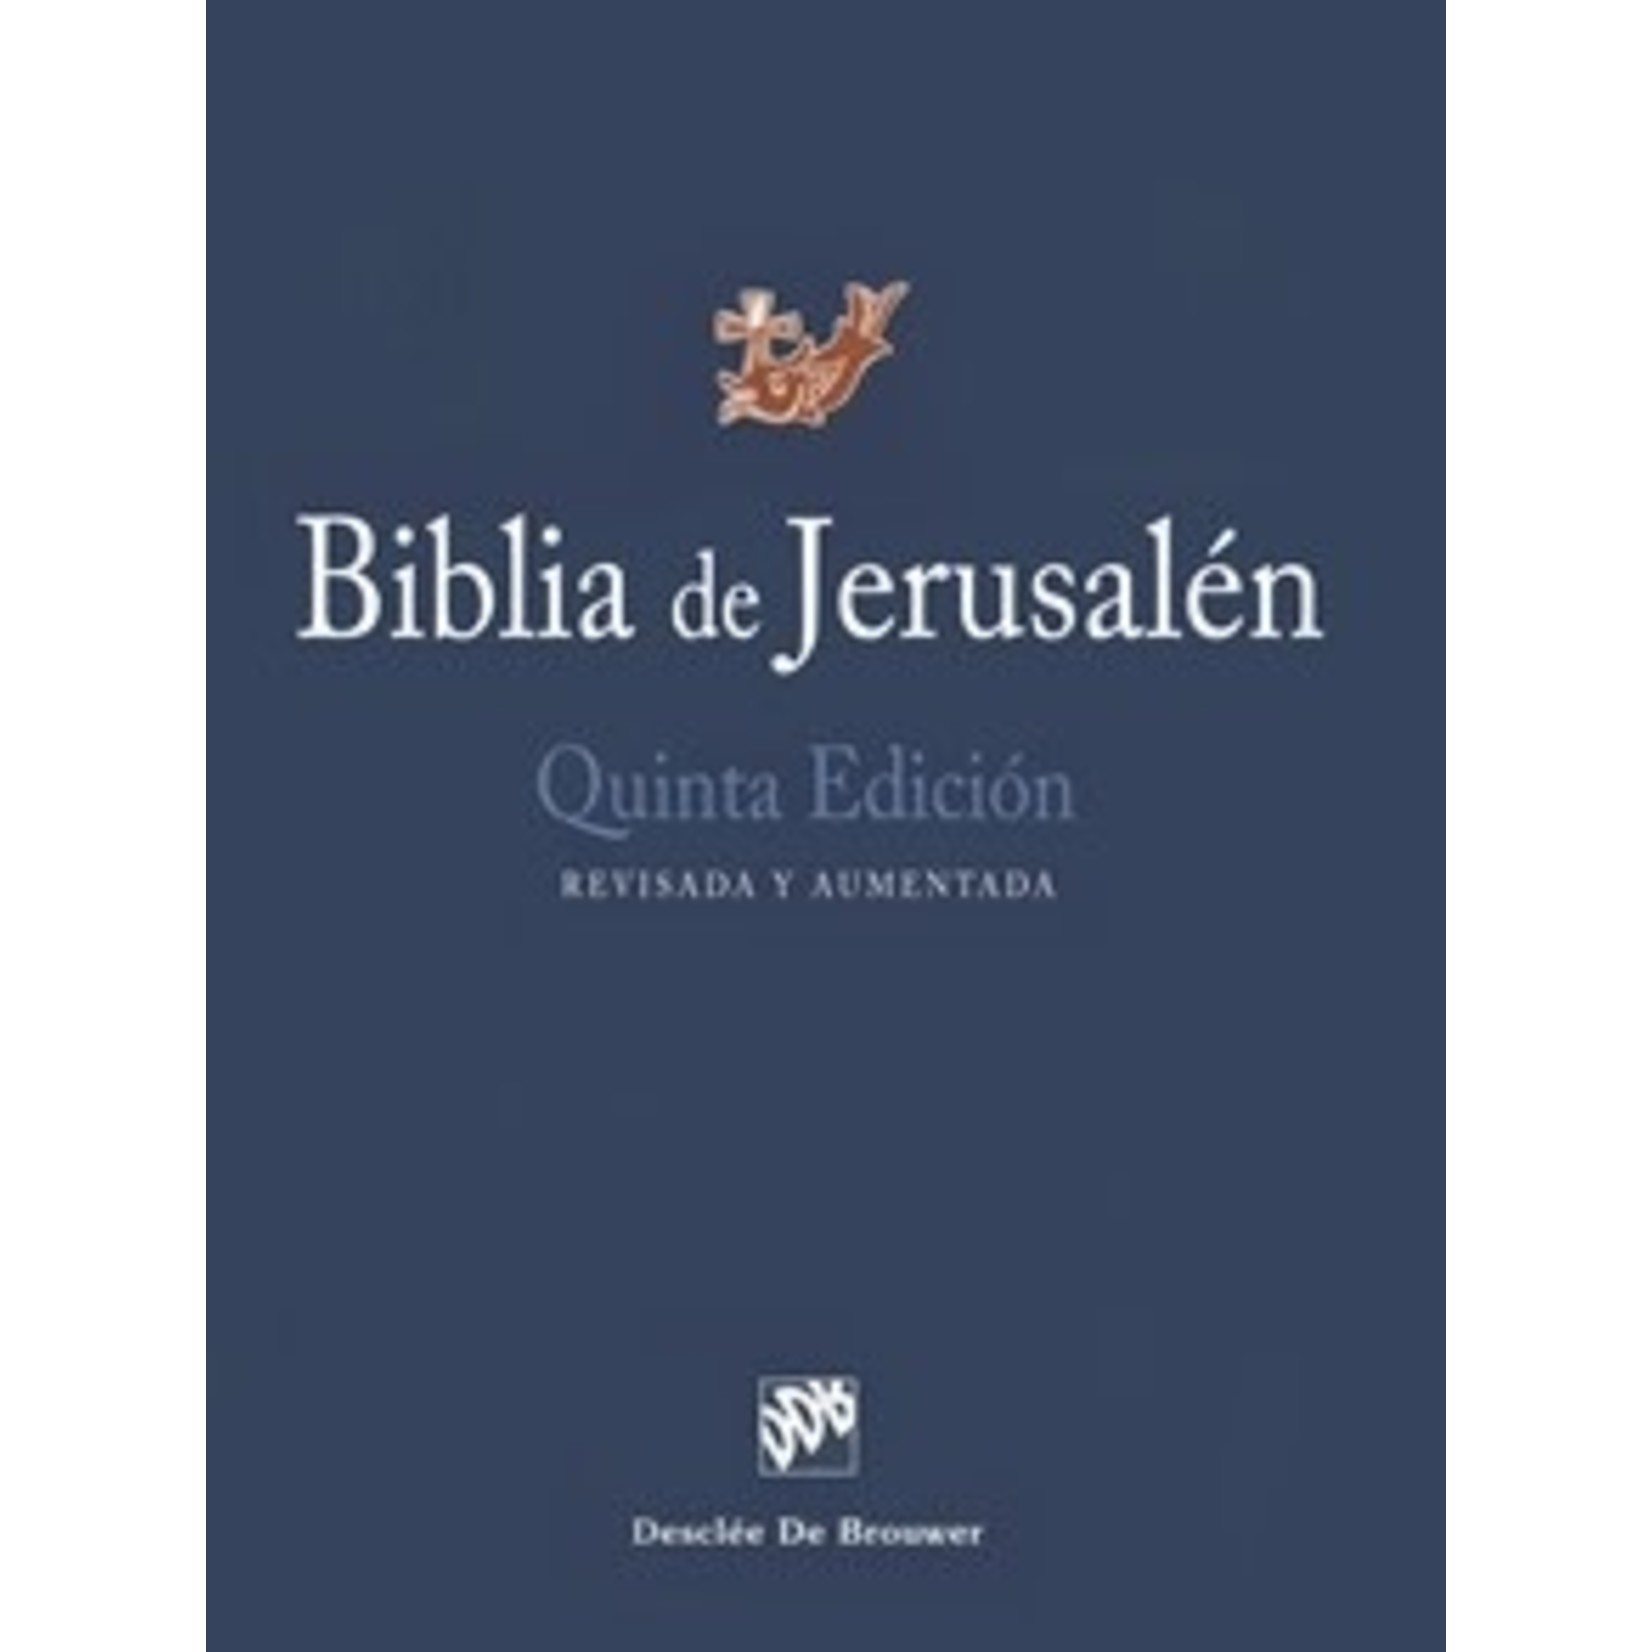 Biblia de Jerusalen Quinta Edicion